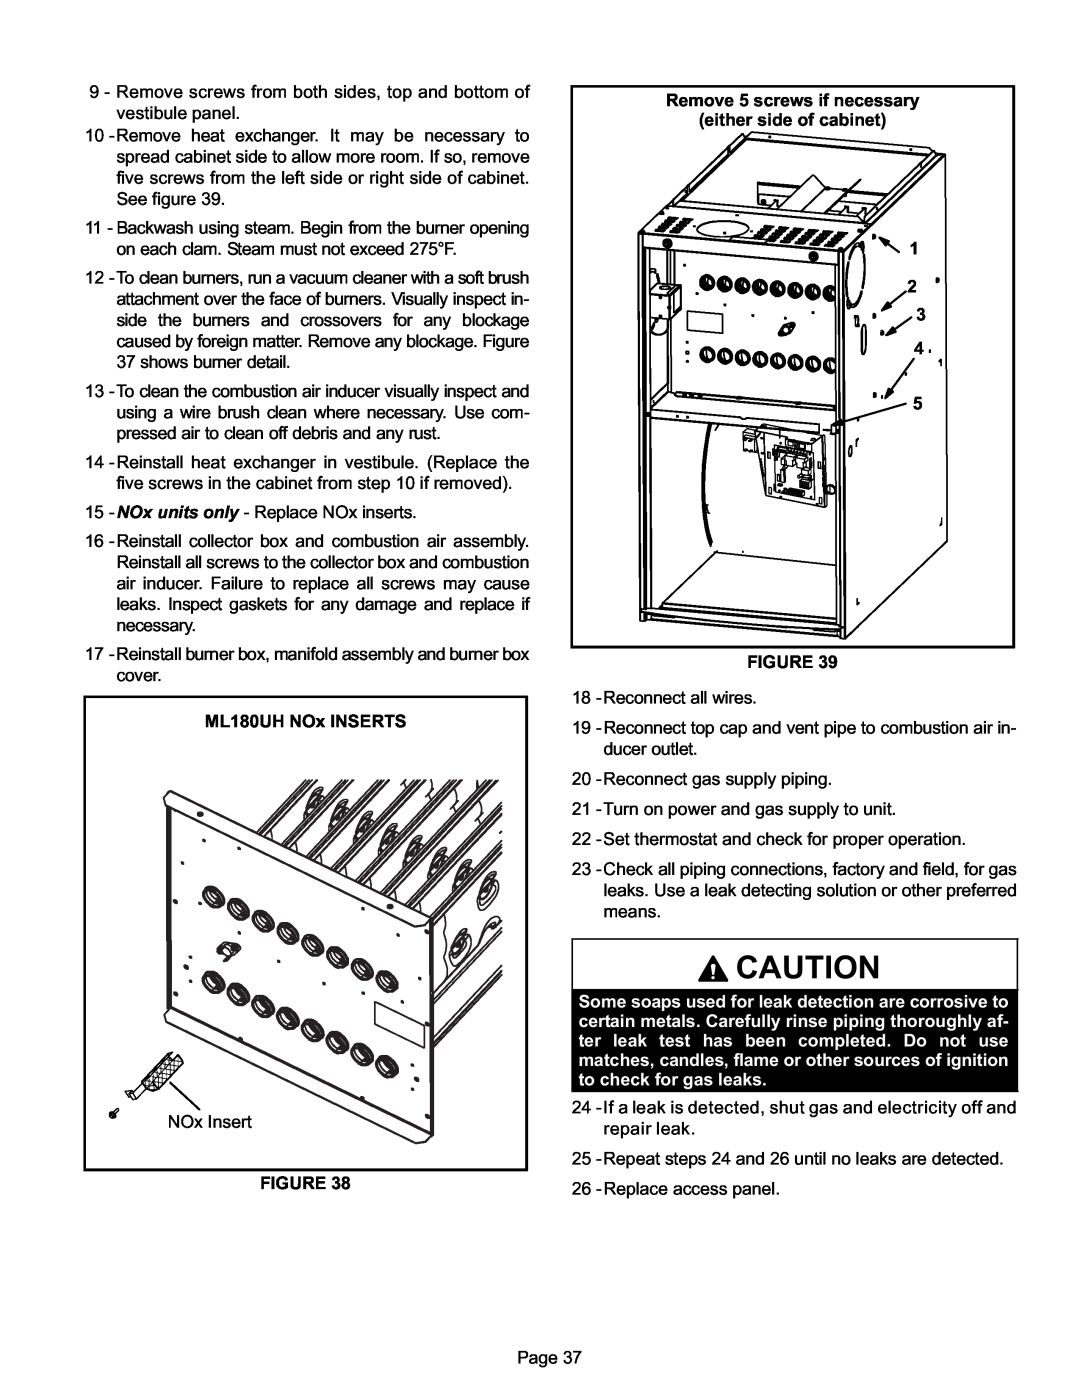 Lennox International Inc Merit Series Gas Furnace installation instructions 15−NOx units only − Replace NOx inserts 